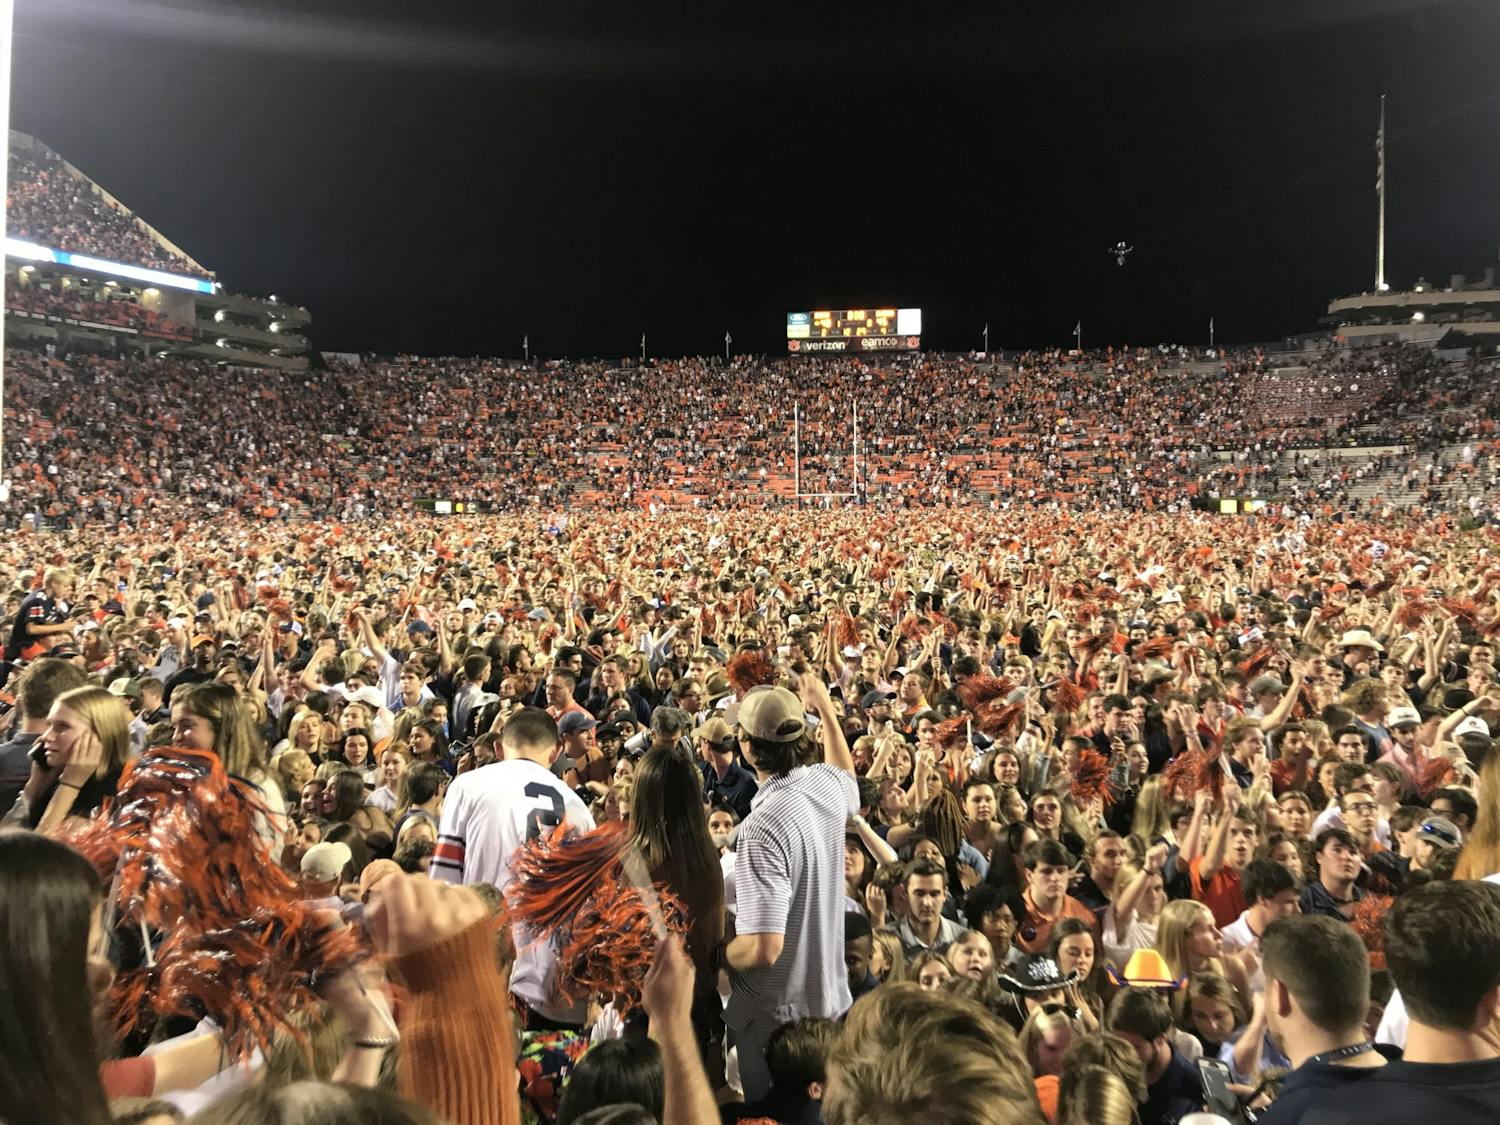 Auburn fans storm the field after winning the Iron Bowl